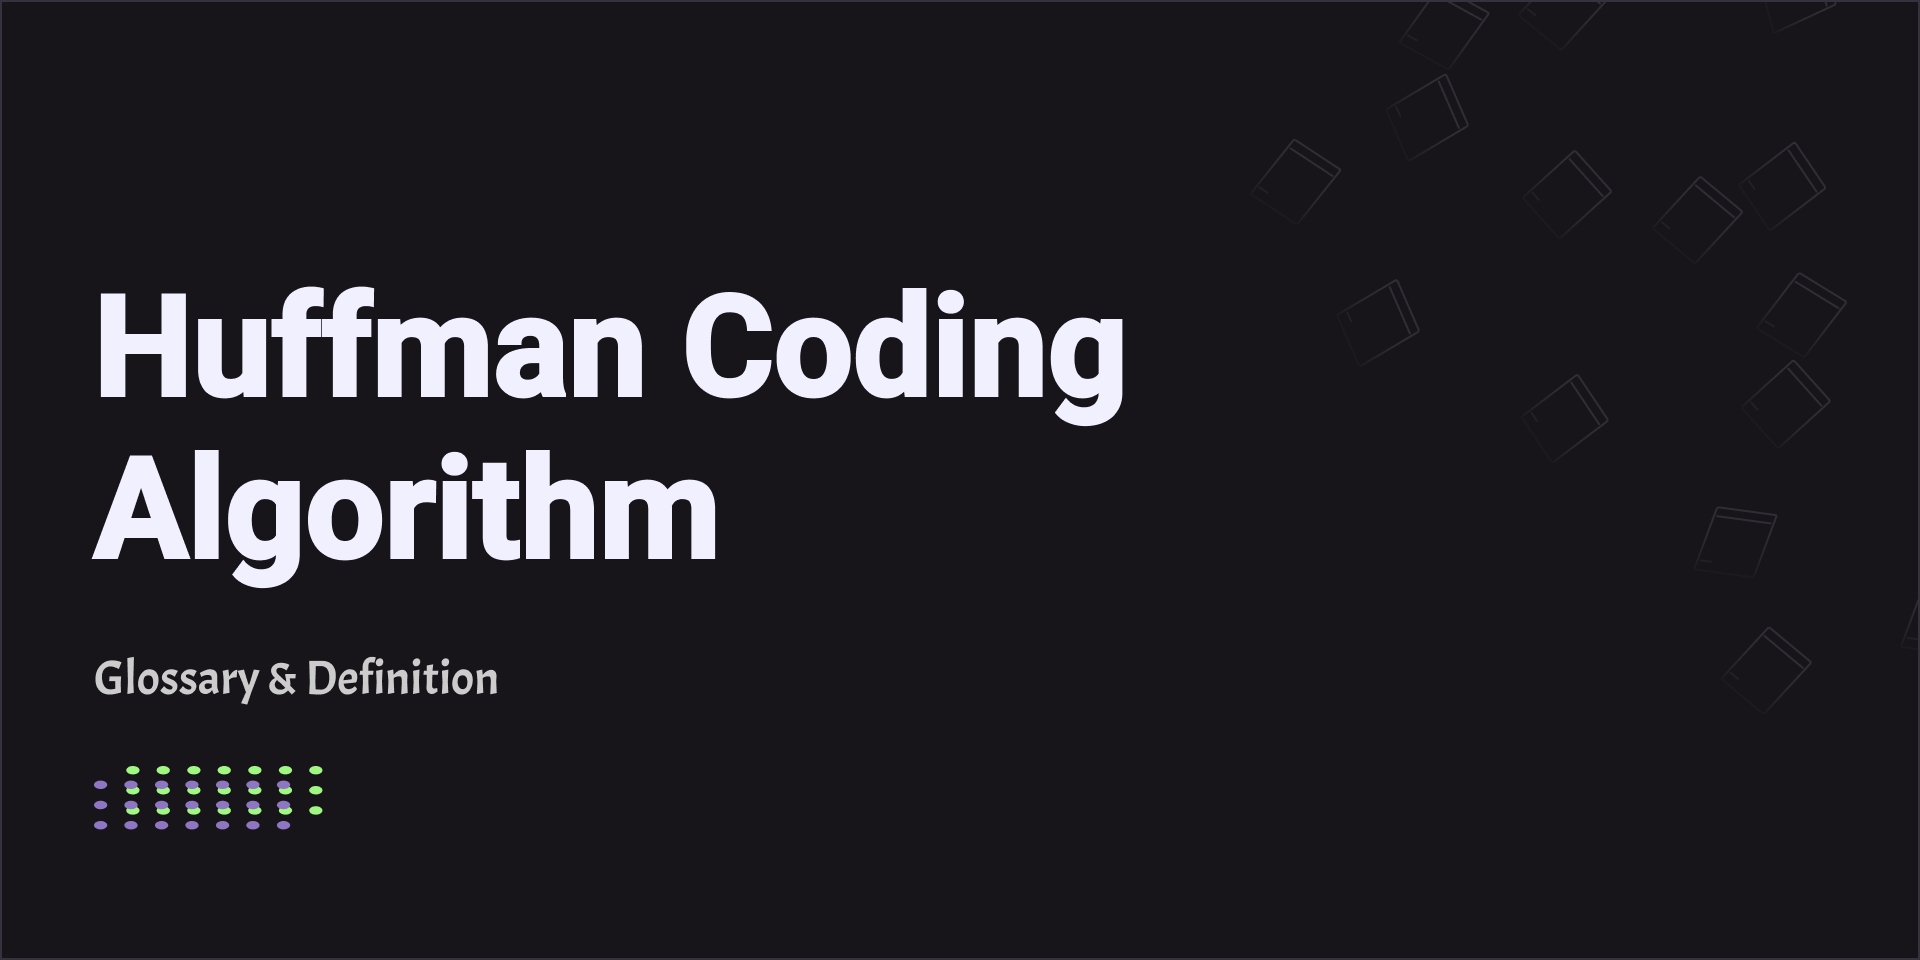 Huffman Coding Algorithm